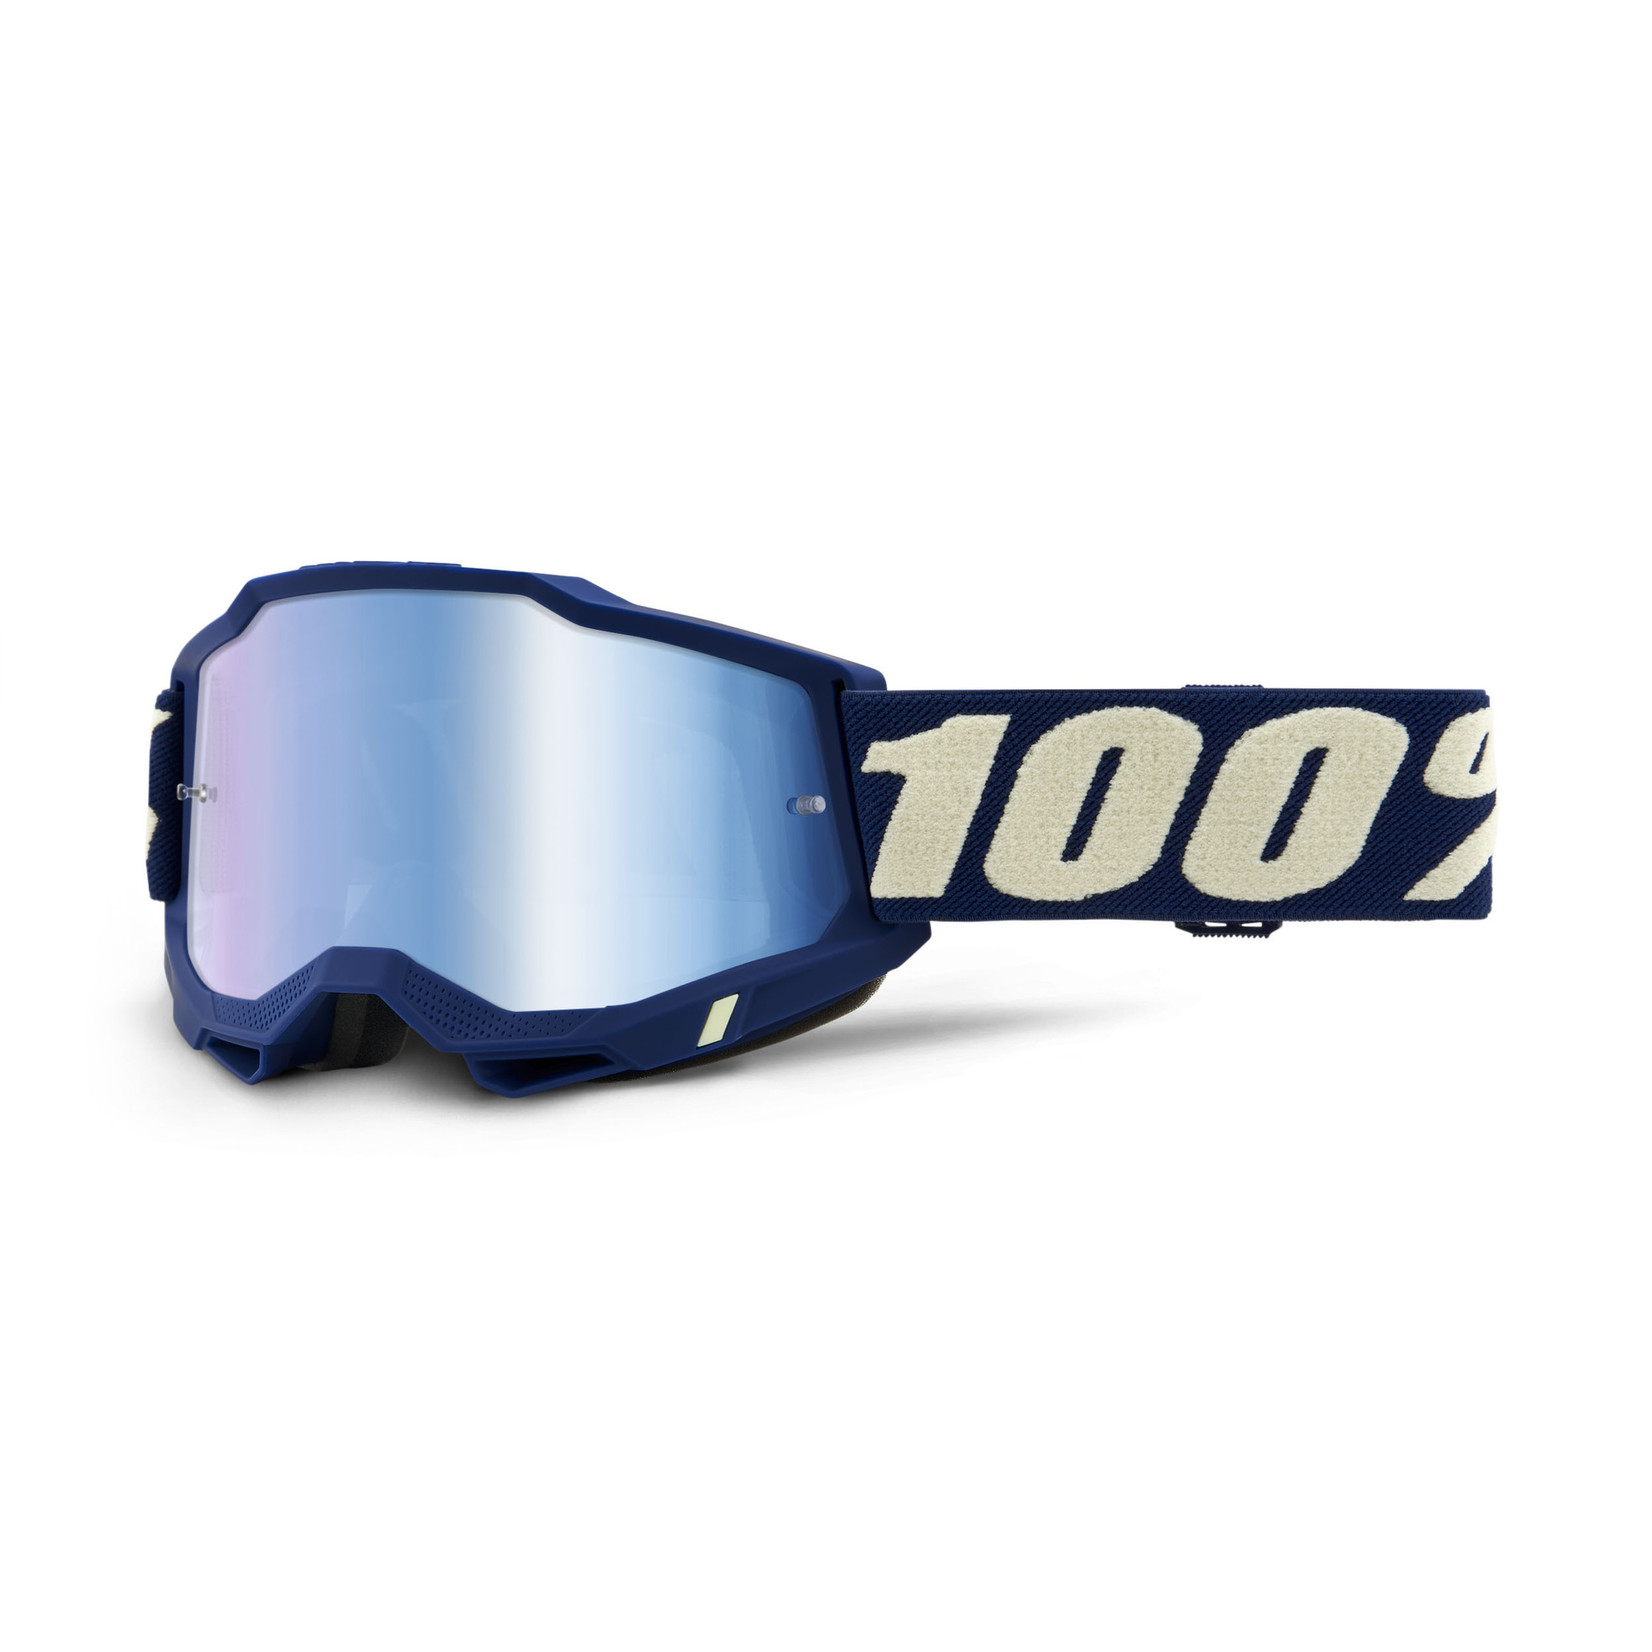 1 100% Accuri 2 Goggle Deepmarine - Mirror Blue Lens